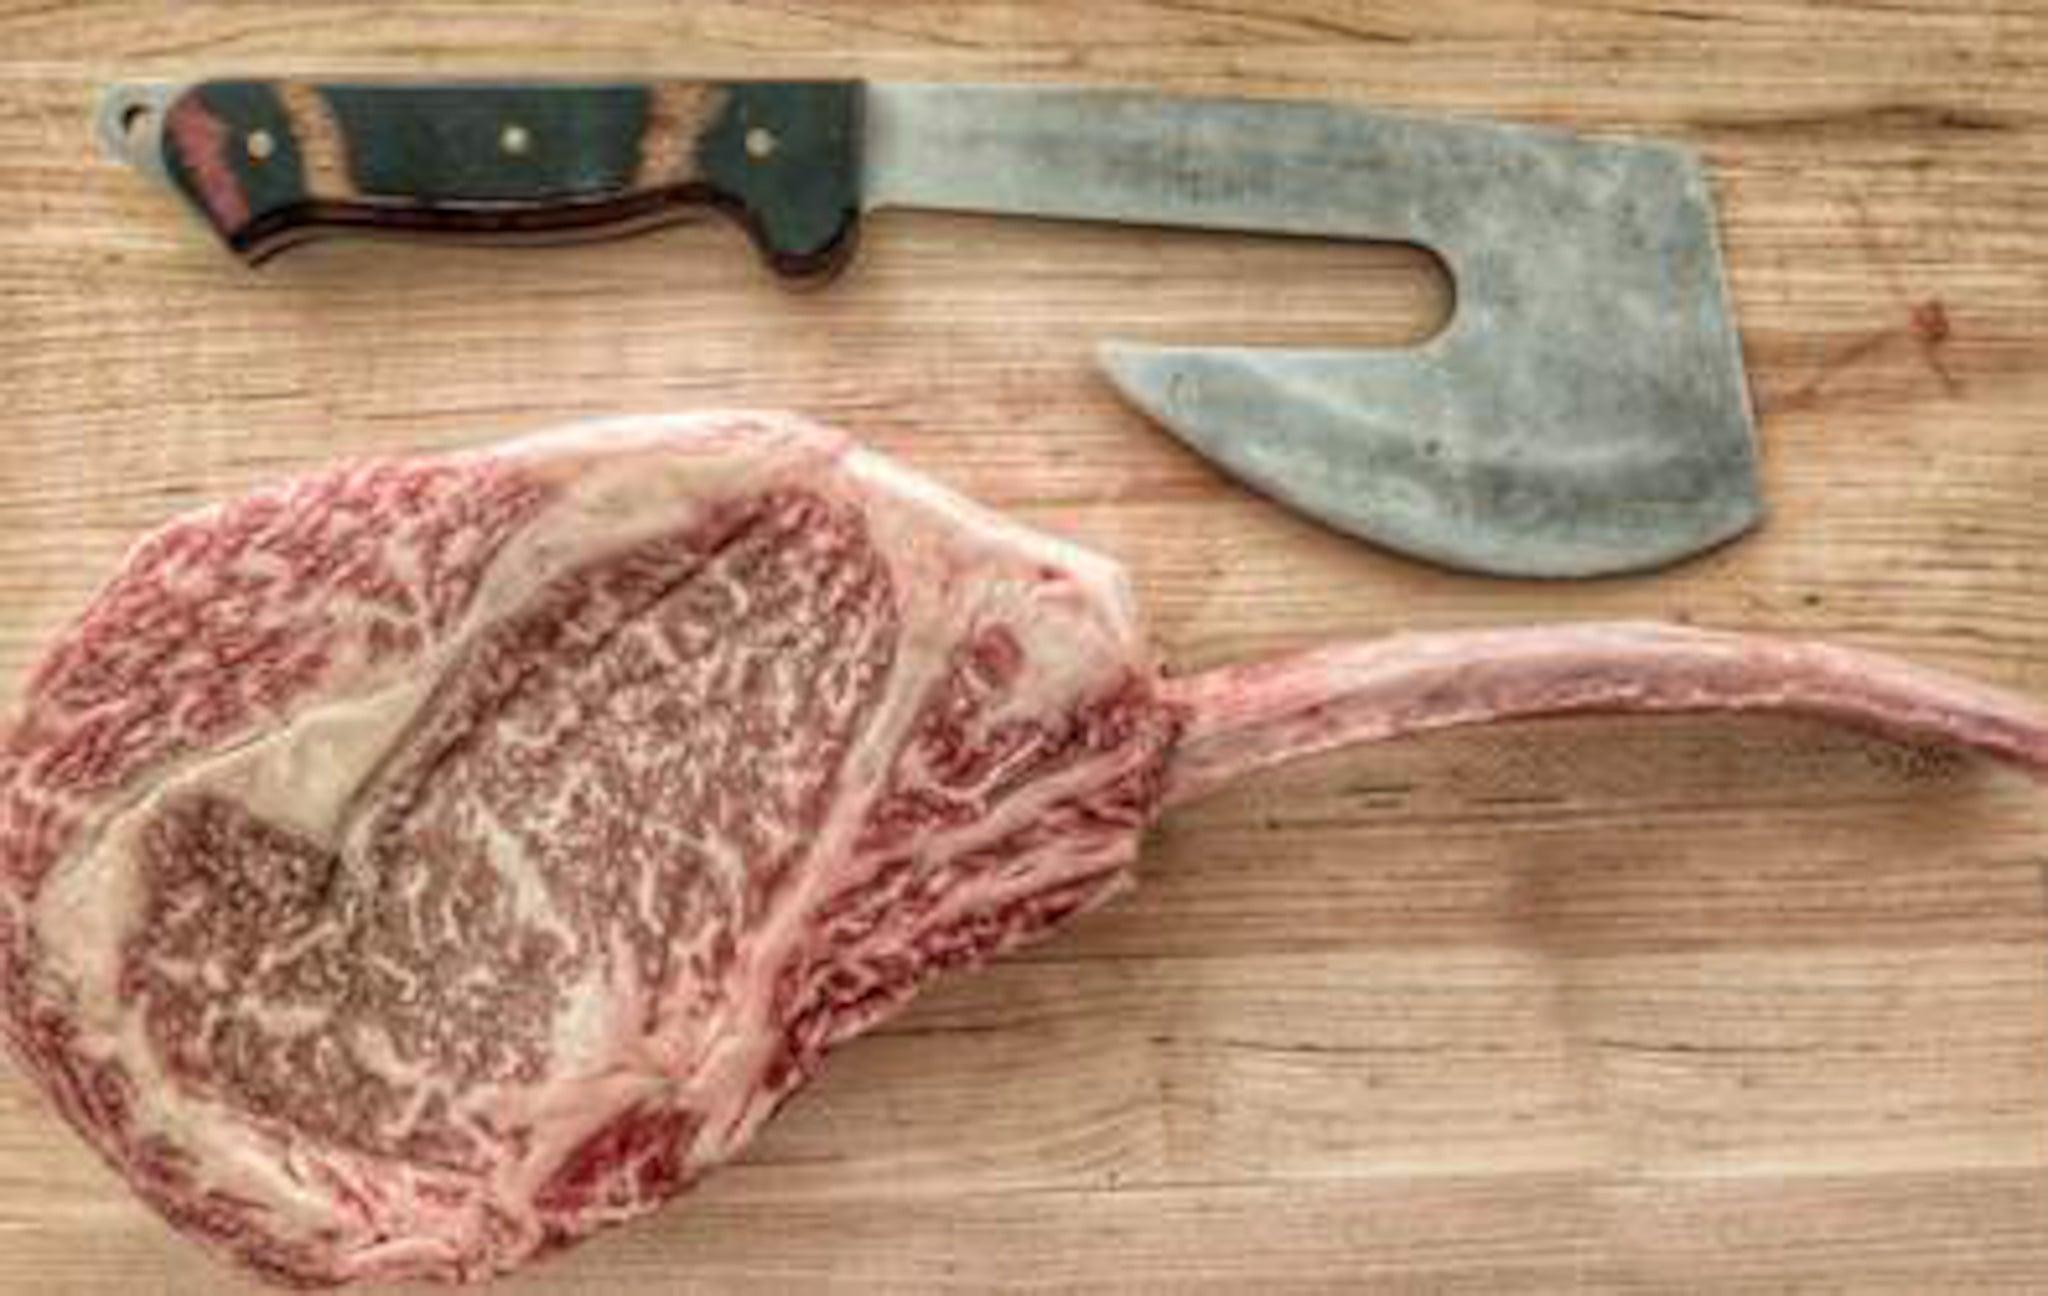 Grumpy Butcher Australian Wagyu Beef Monster Tomahawk Steak, 48-60 oz | Aged Pure-blood Wagyu, Professional Cut & Trim | Bone-In Tomahawk Steak